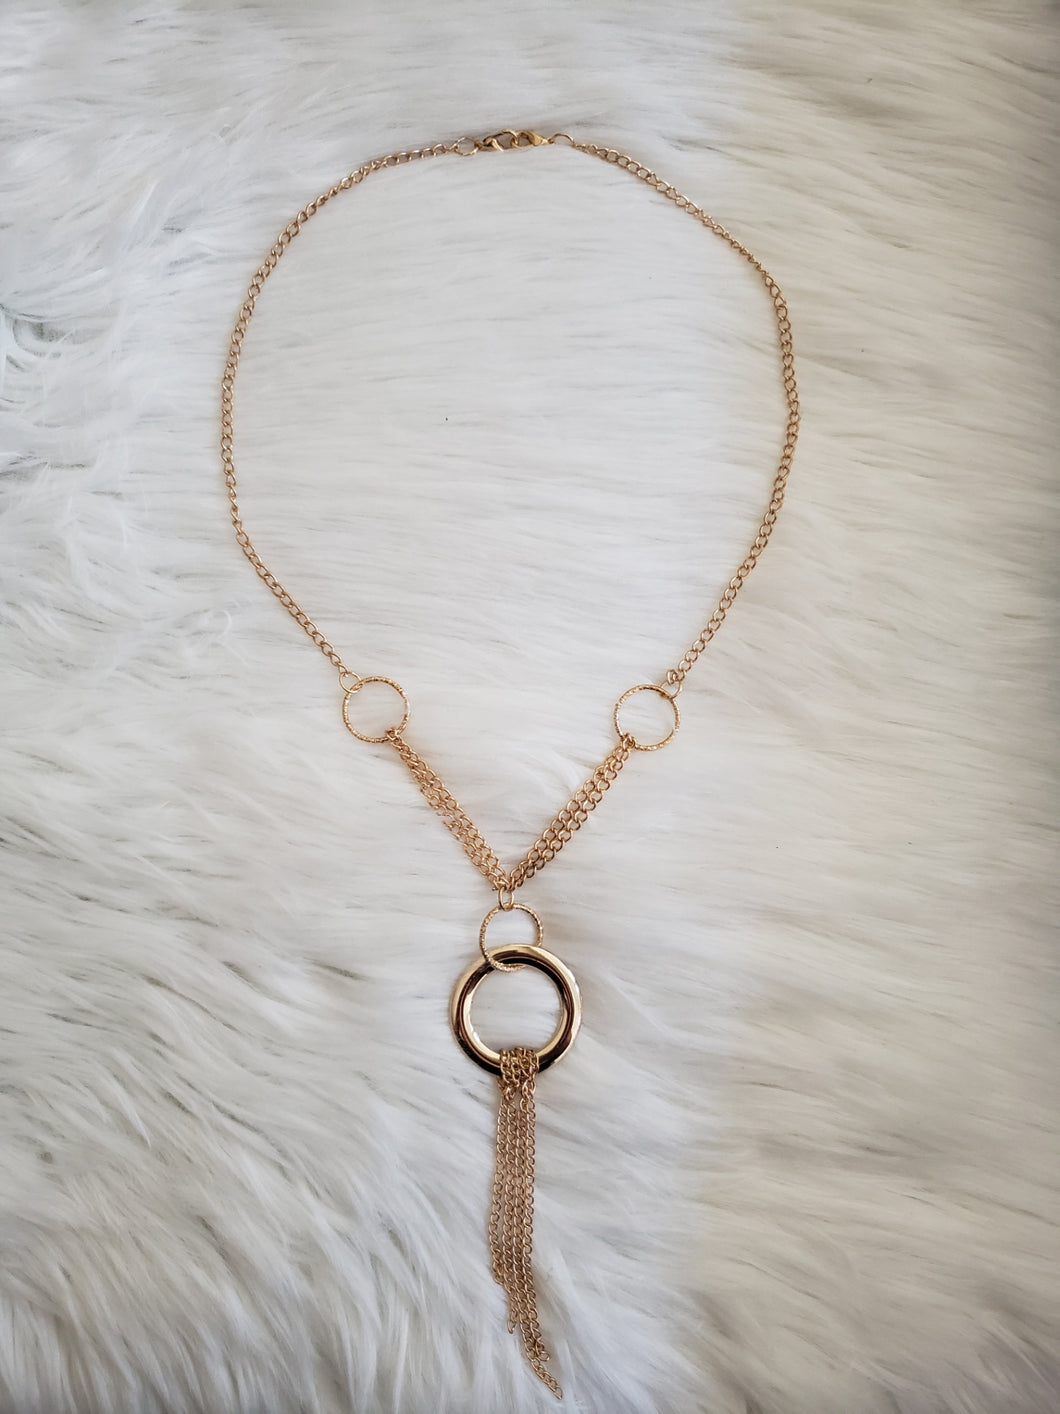 Gold Color 3 Ring Necklace with Bottom Metal Fringe